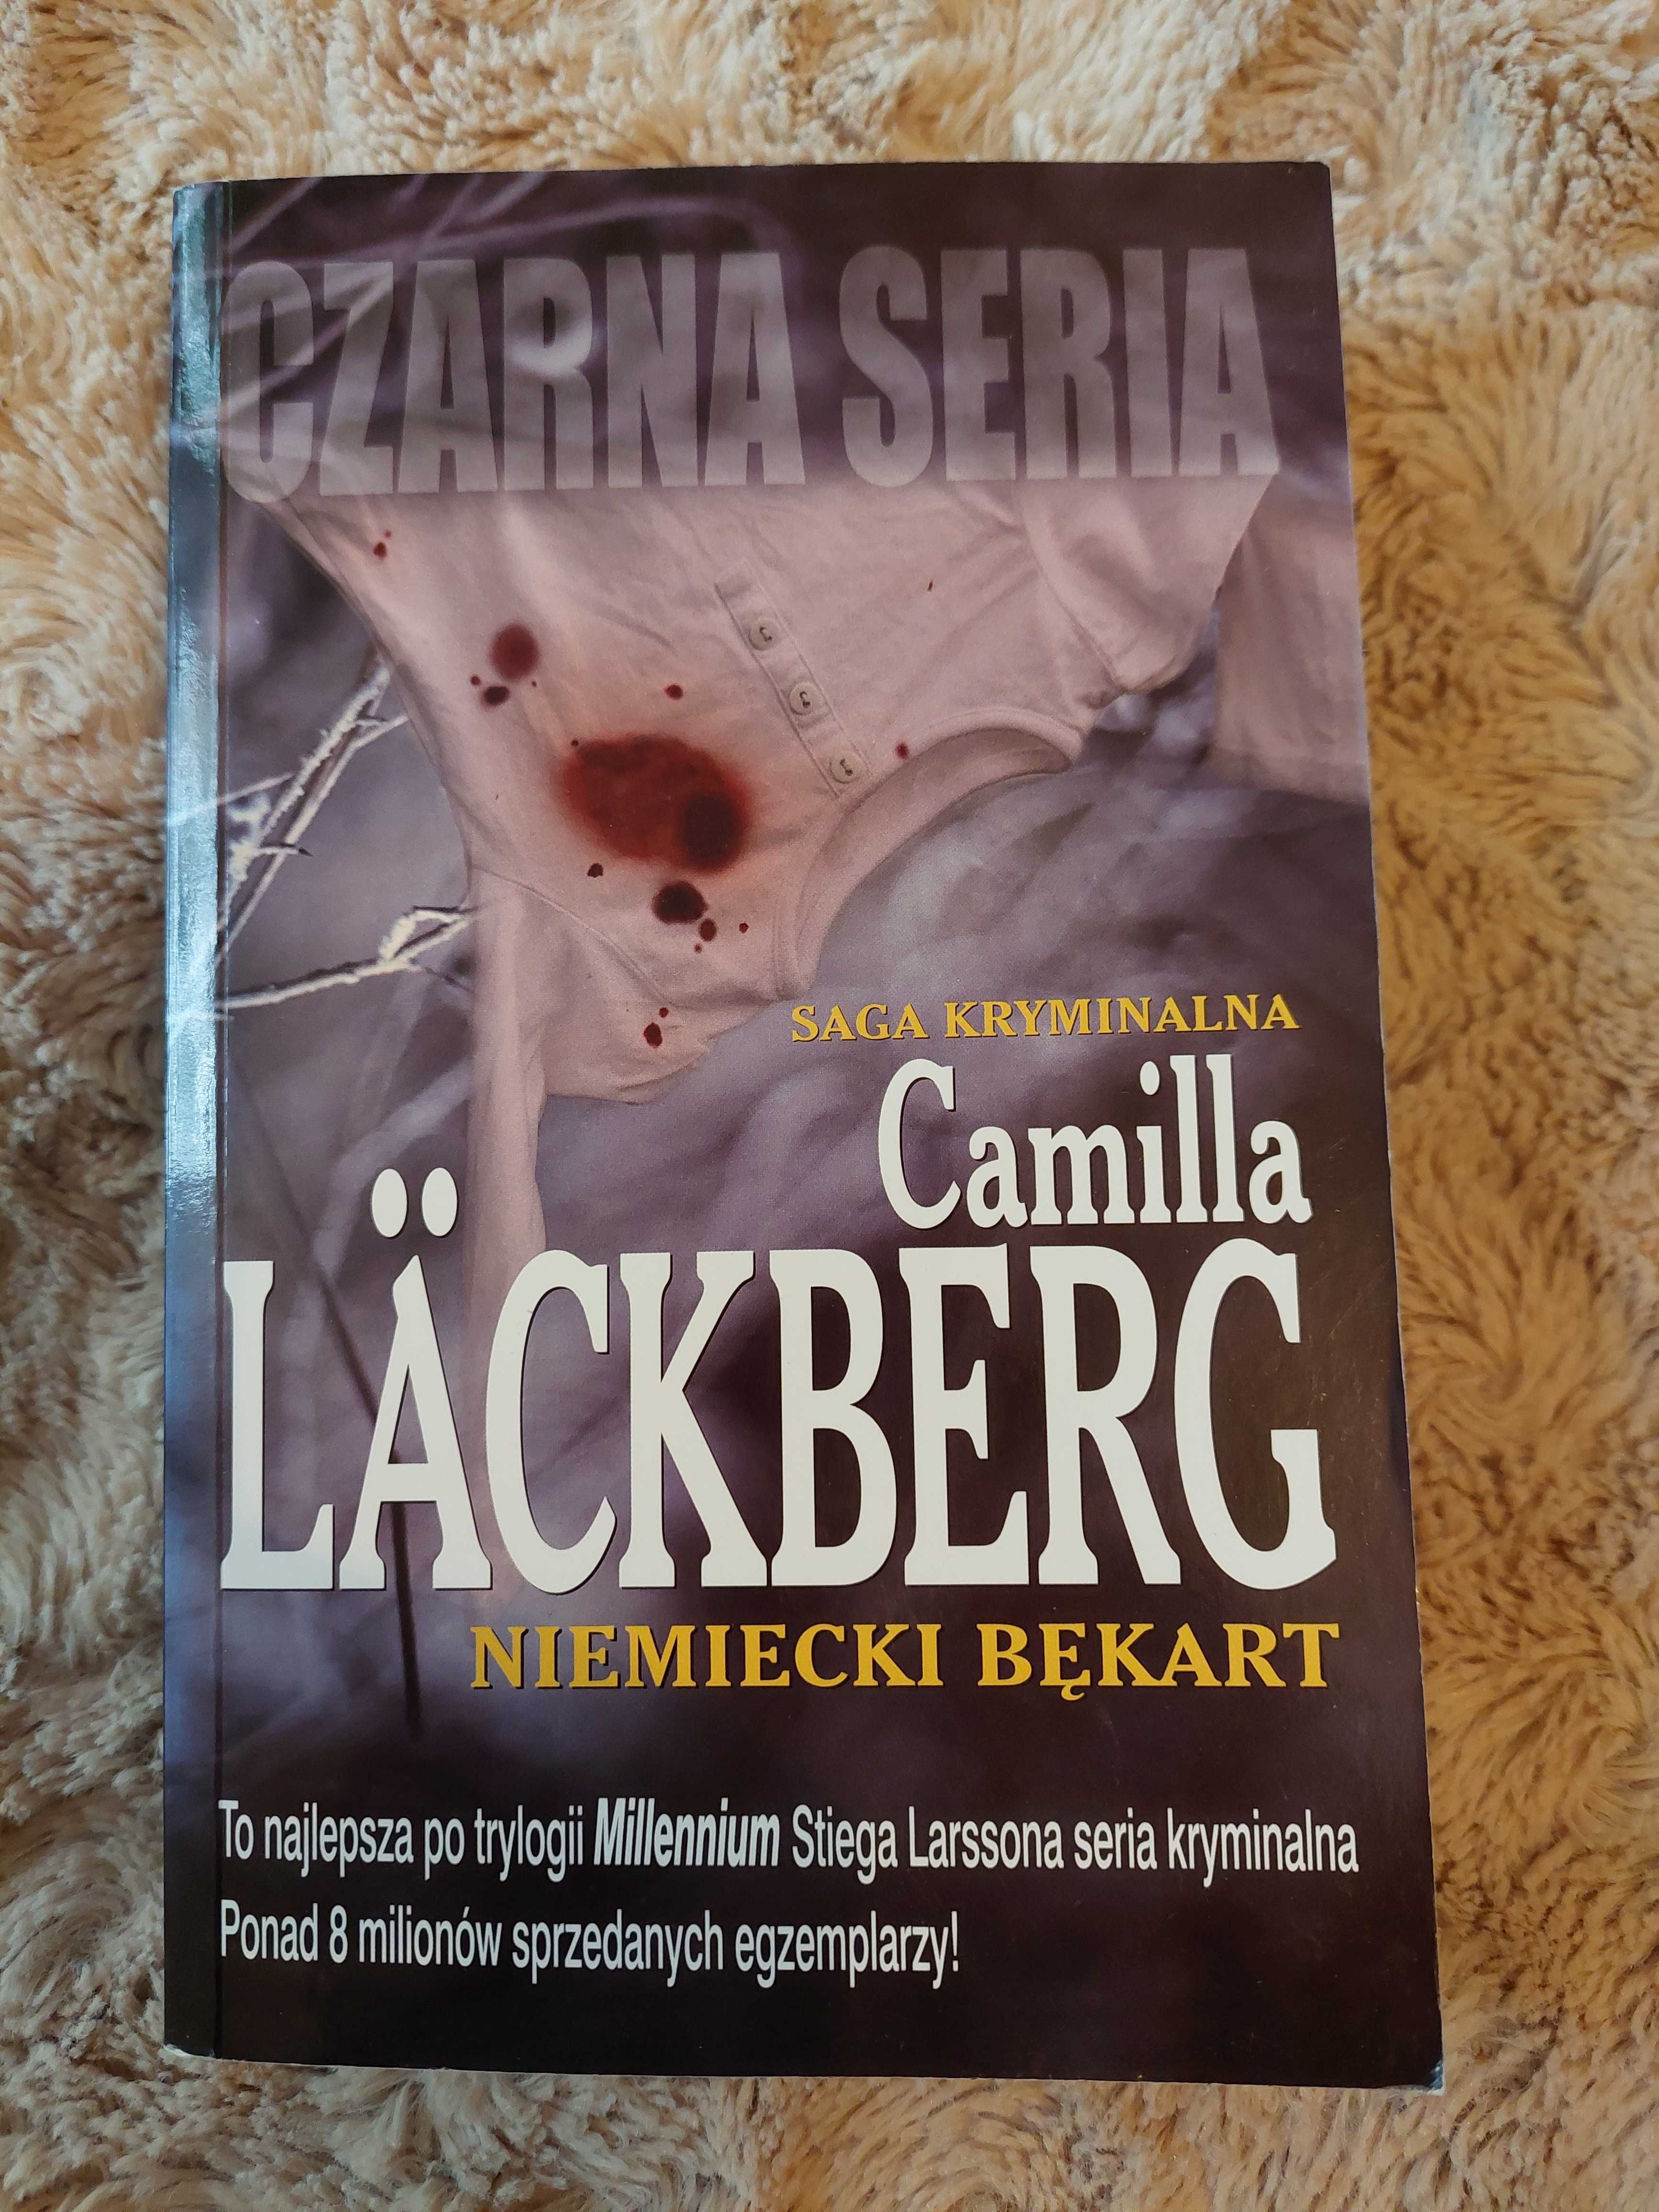 Camilla Lackberg "Niemiecki bękart"